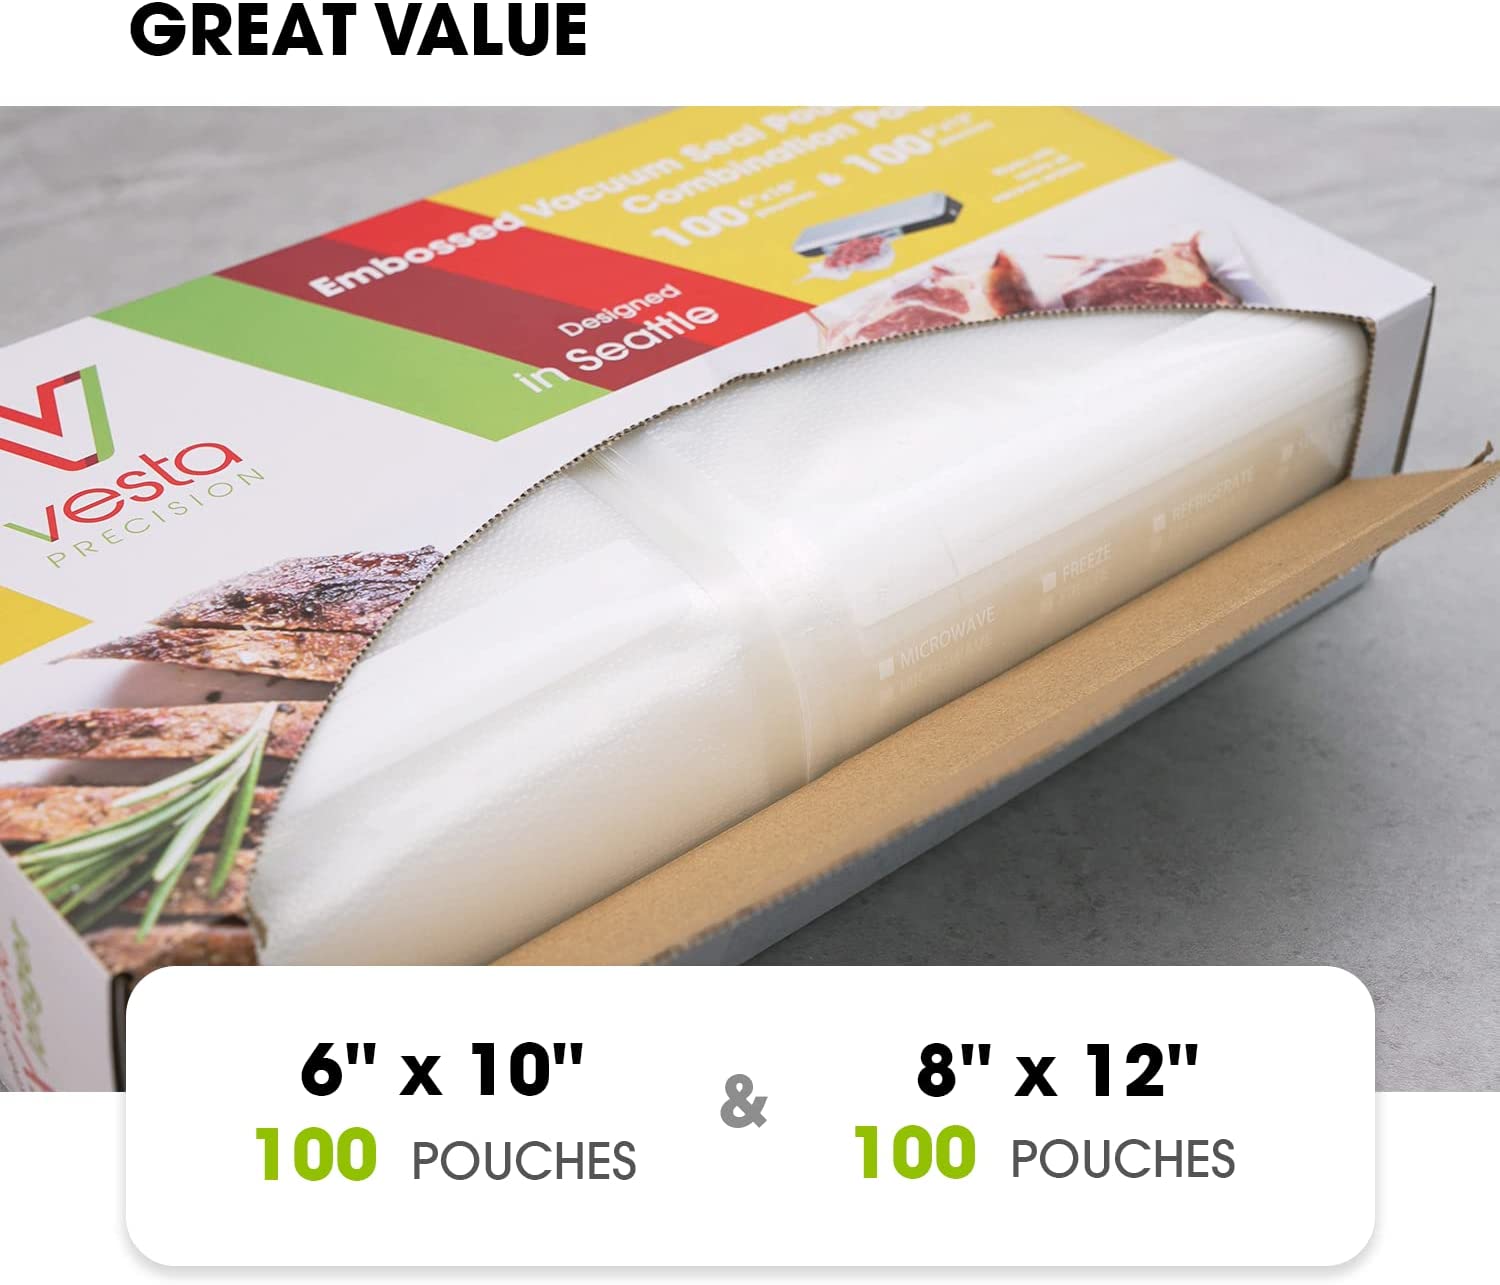 100 Count - Precut Food Vacuum Sealer Bags Storage,Quart Size 8 x 12